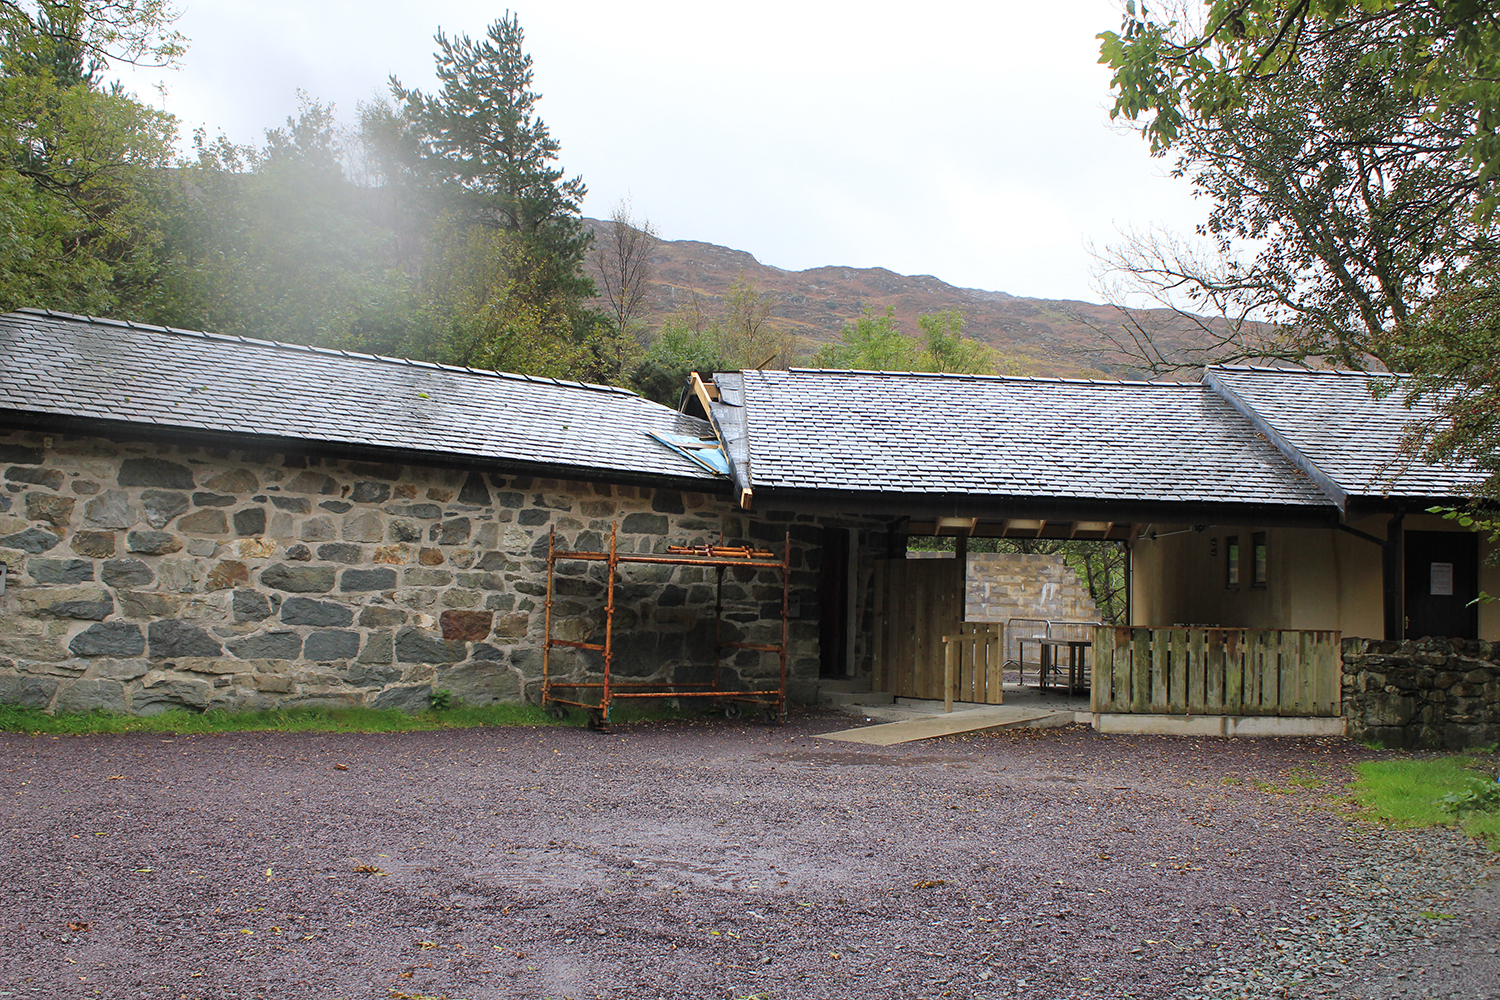 The facilities at Llyn Gwynant campsite in Snowdonia